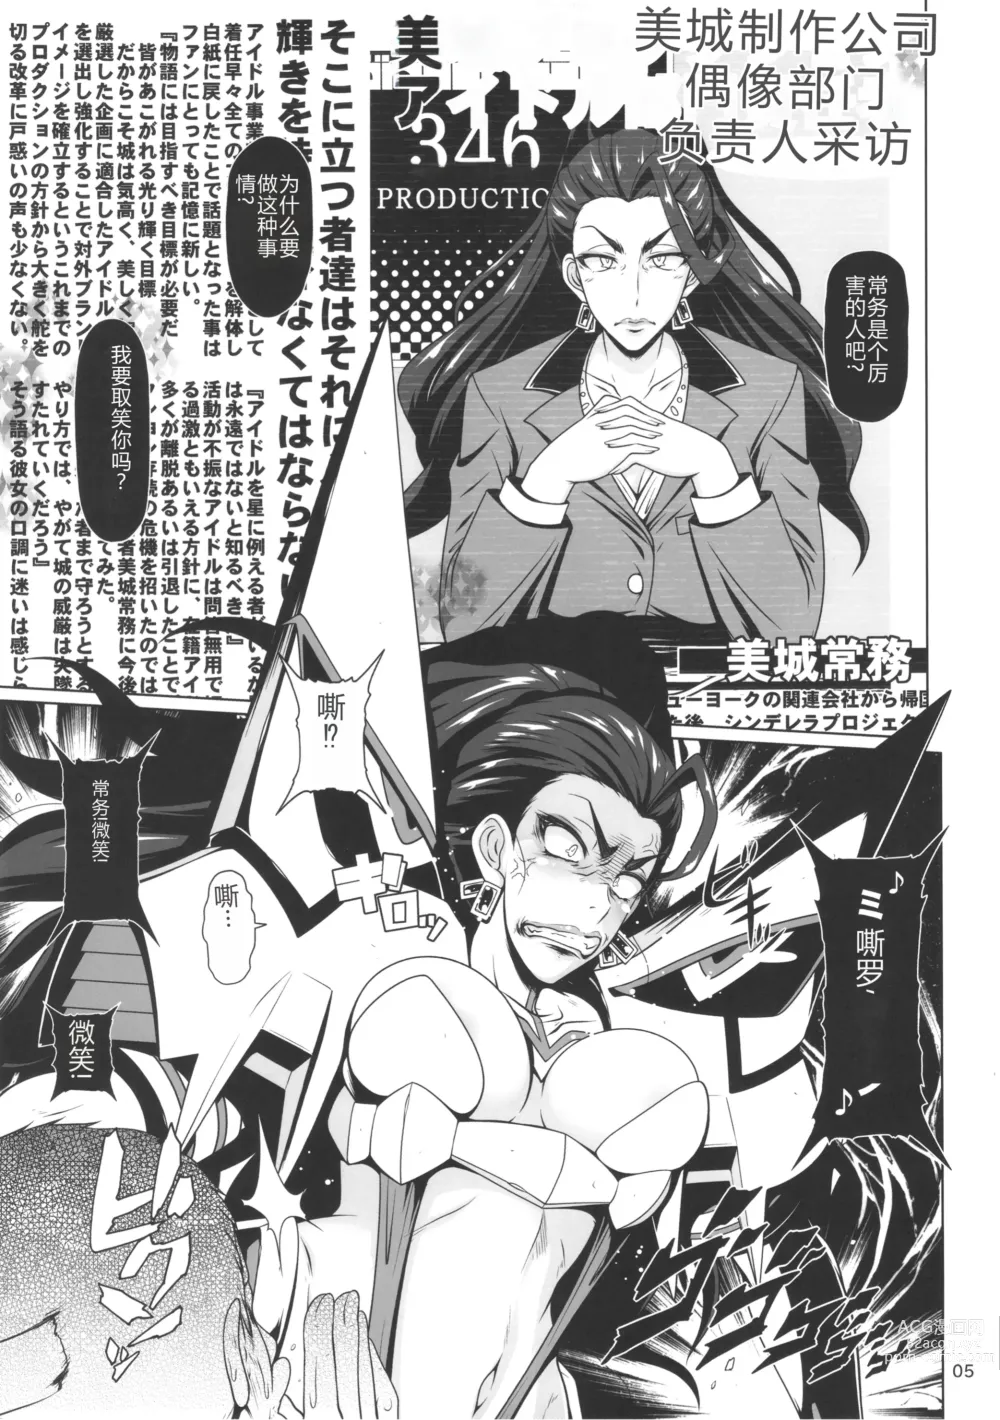 Page 4 of doujinshi Mishiro STYLE